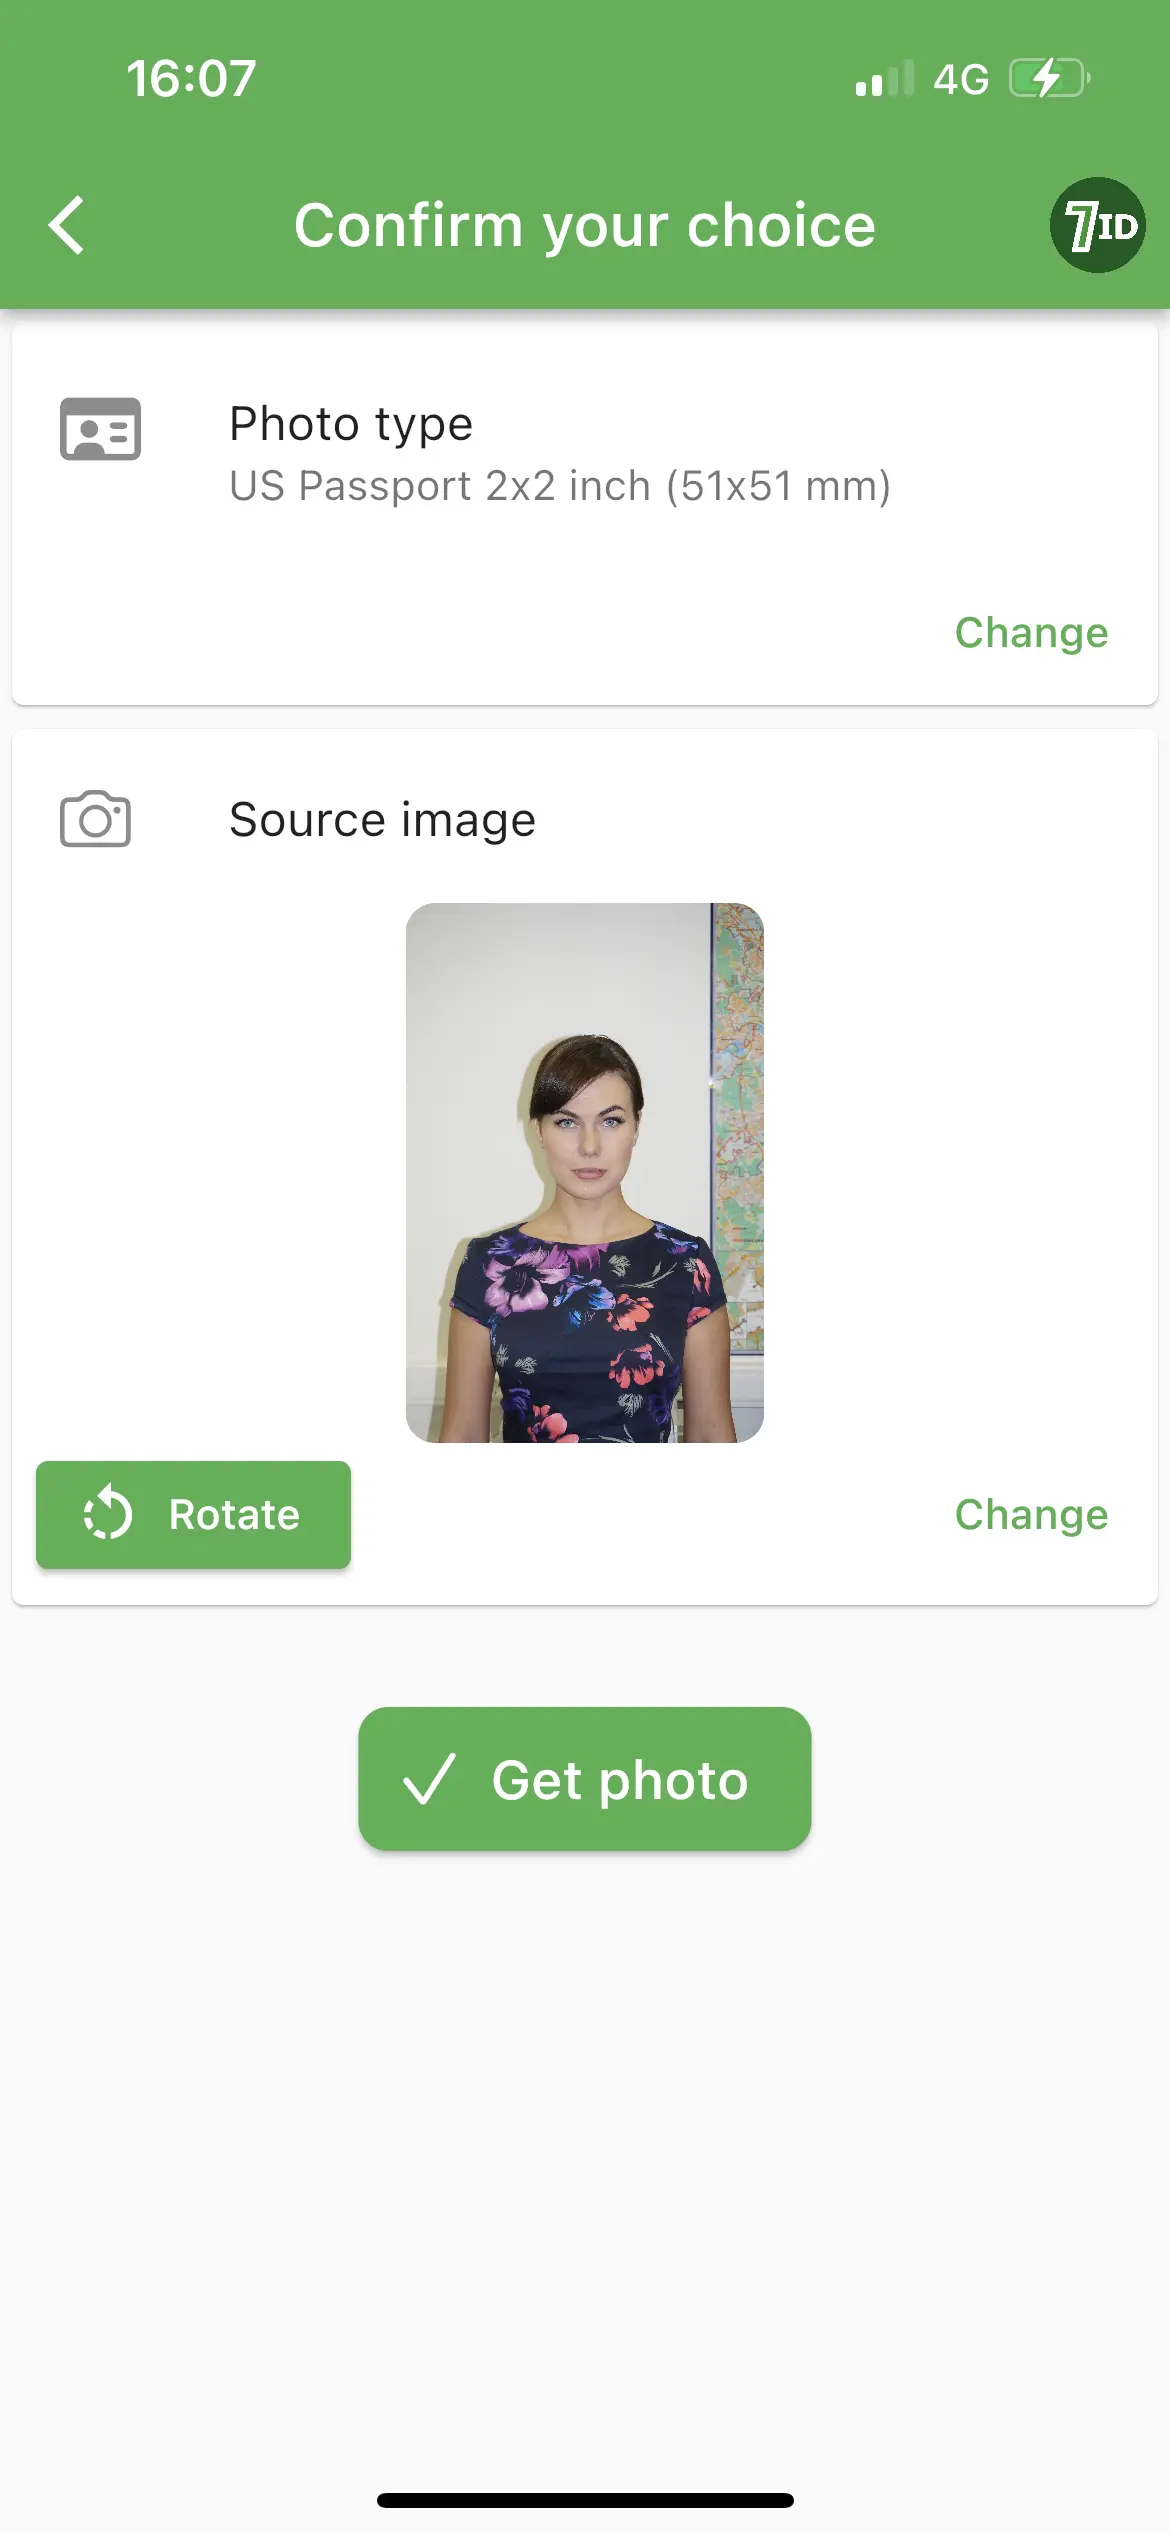 7ID App: Passport Photo Size